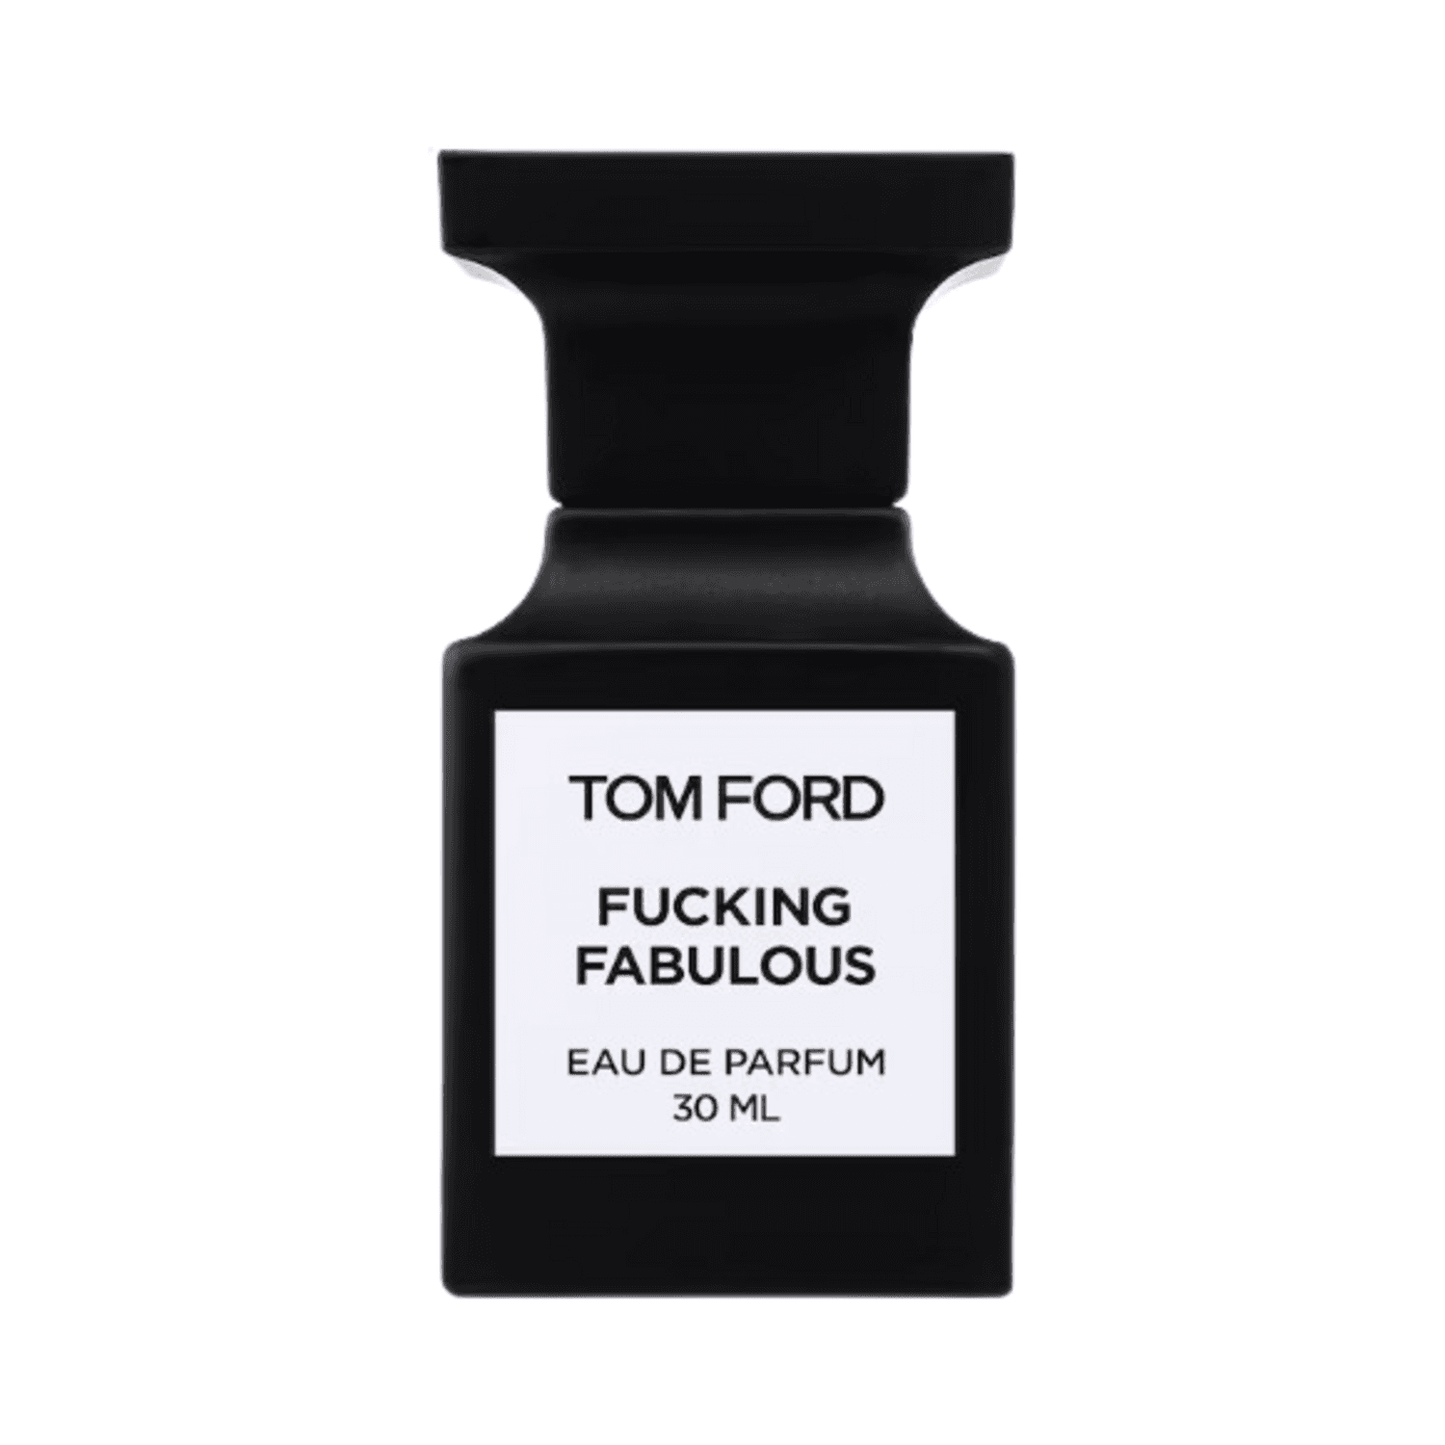 Tom Ford F'ing Fabulous